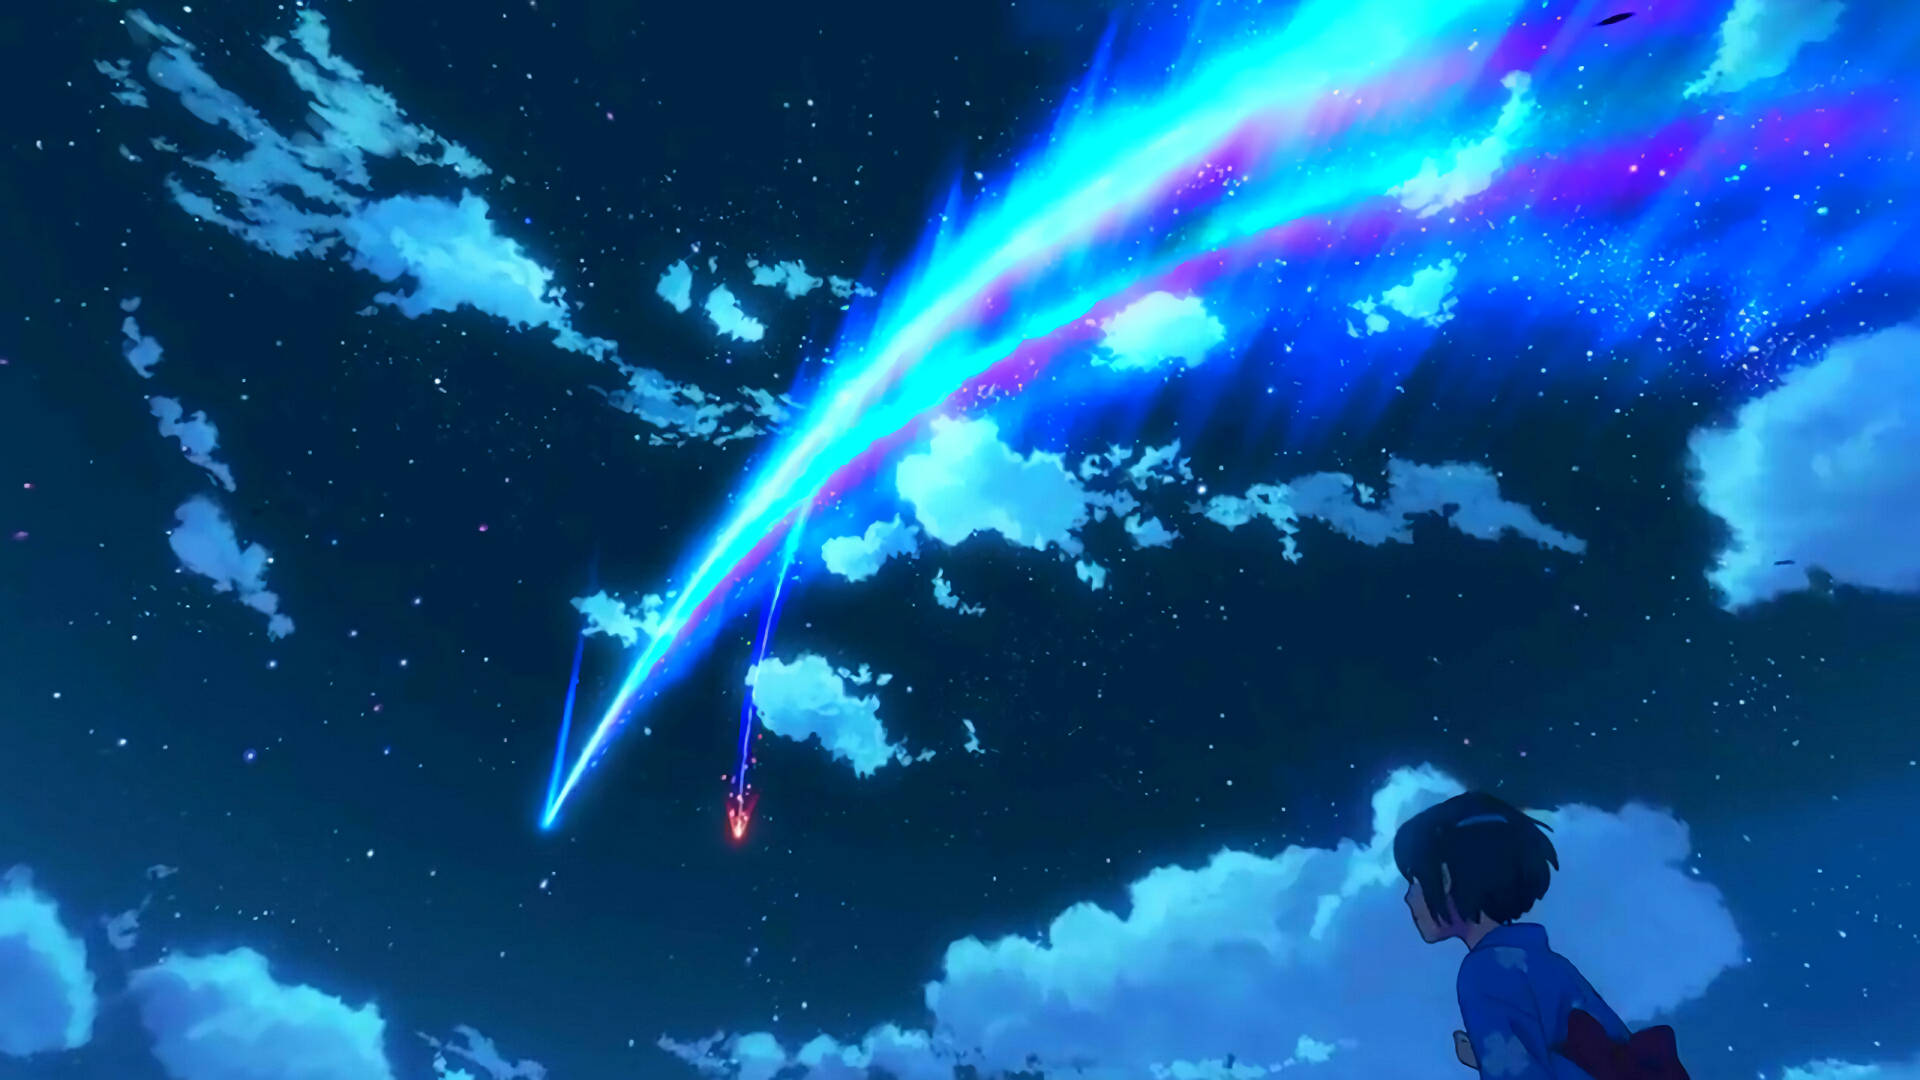 Your Name Anime Comet Scene